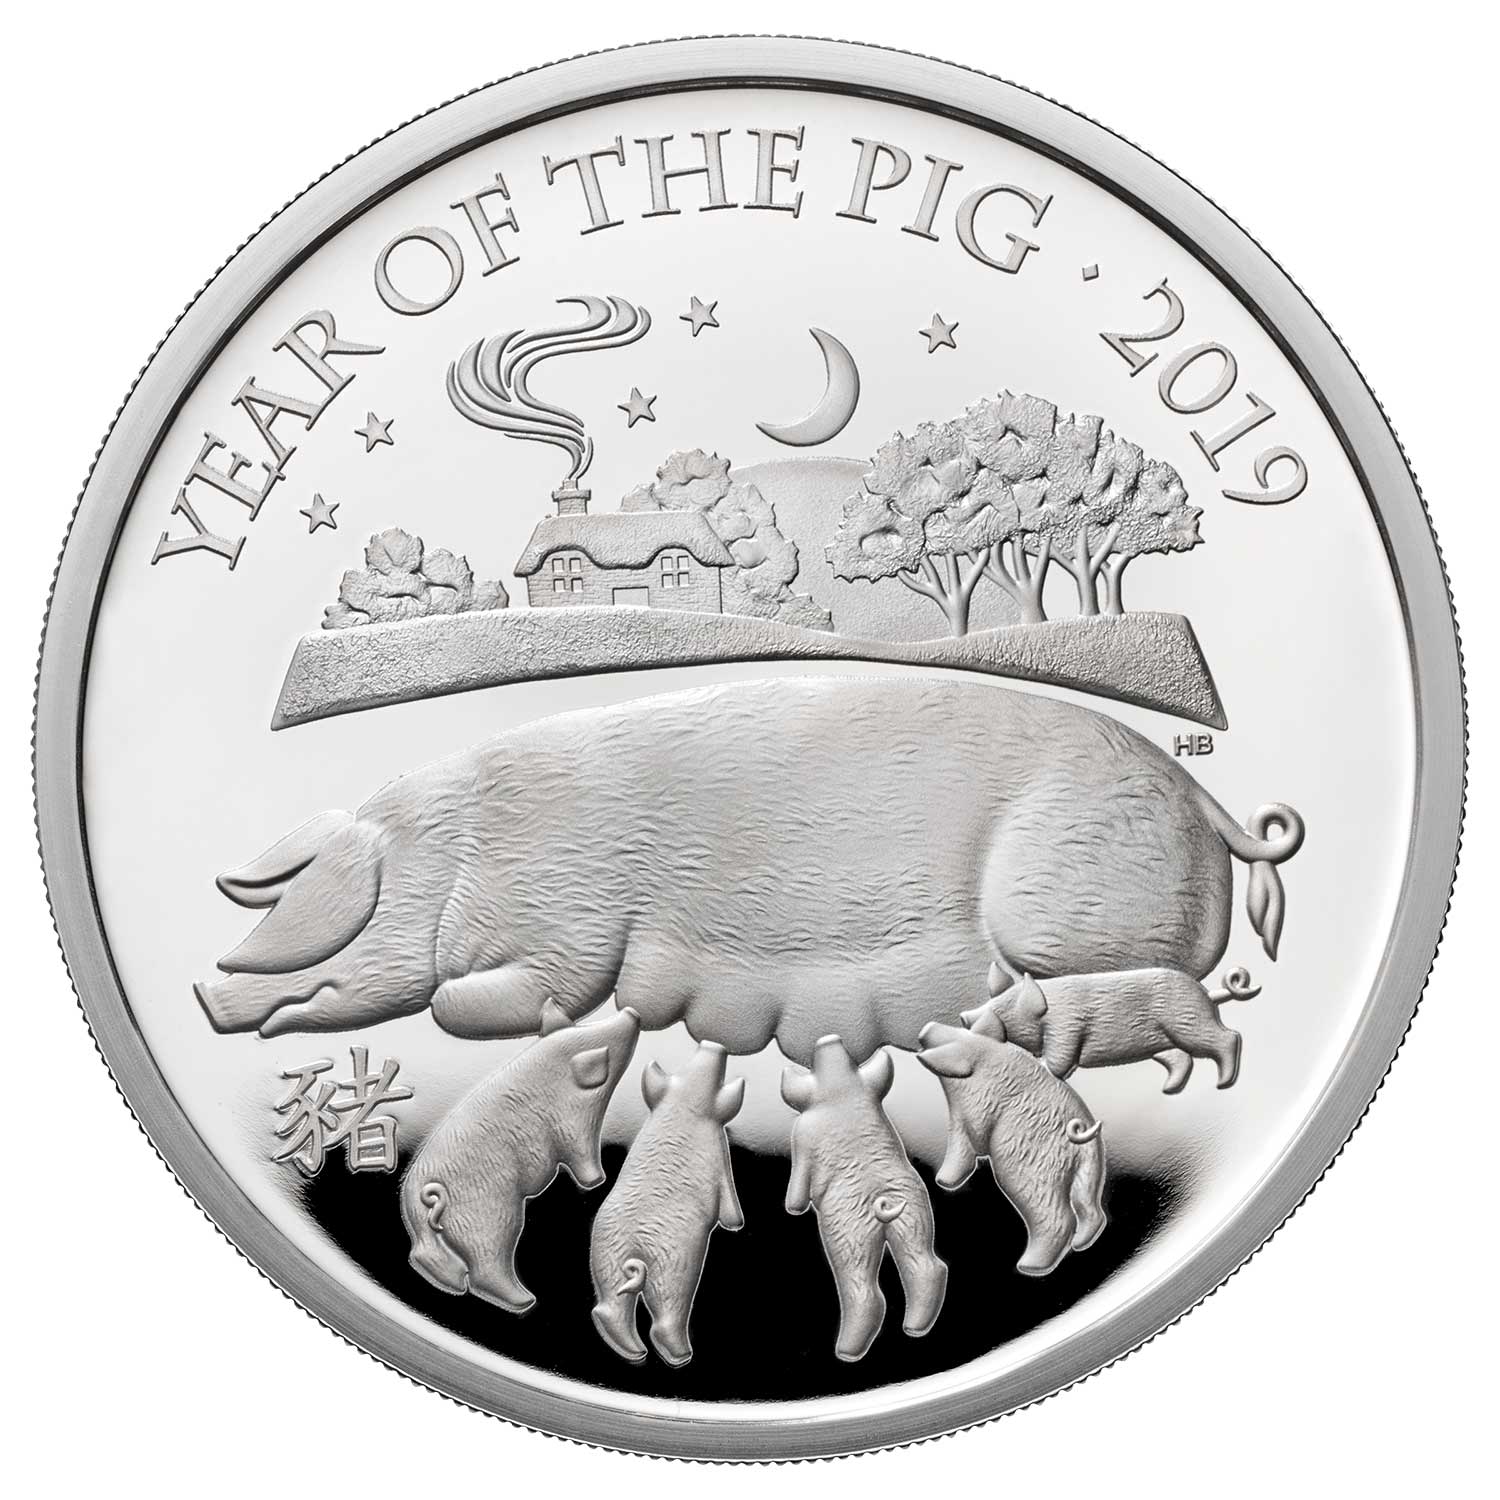 Year of the pig gold 2019 chinese zodiac coin anniversary coins souvenir coinPER